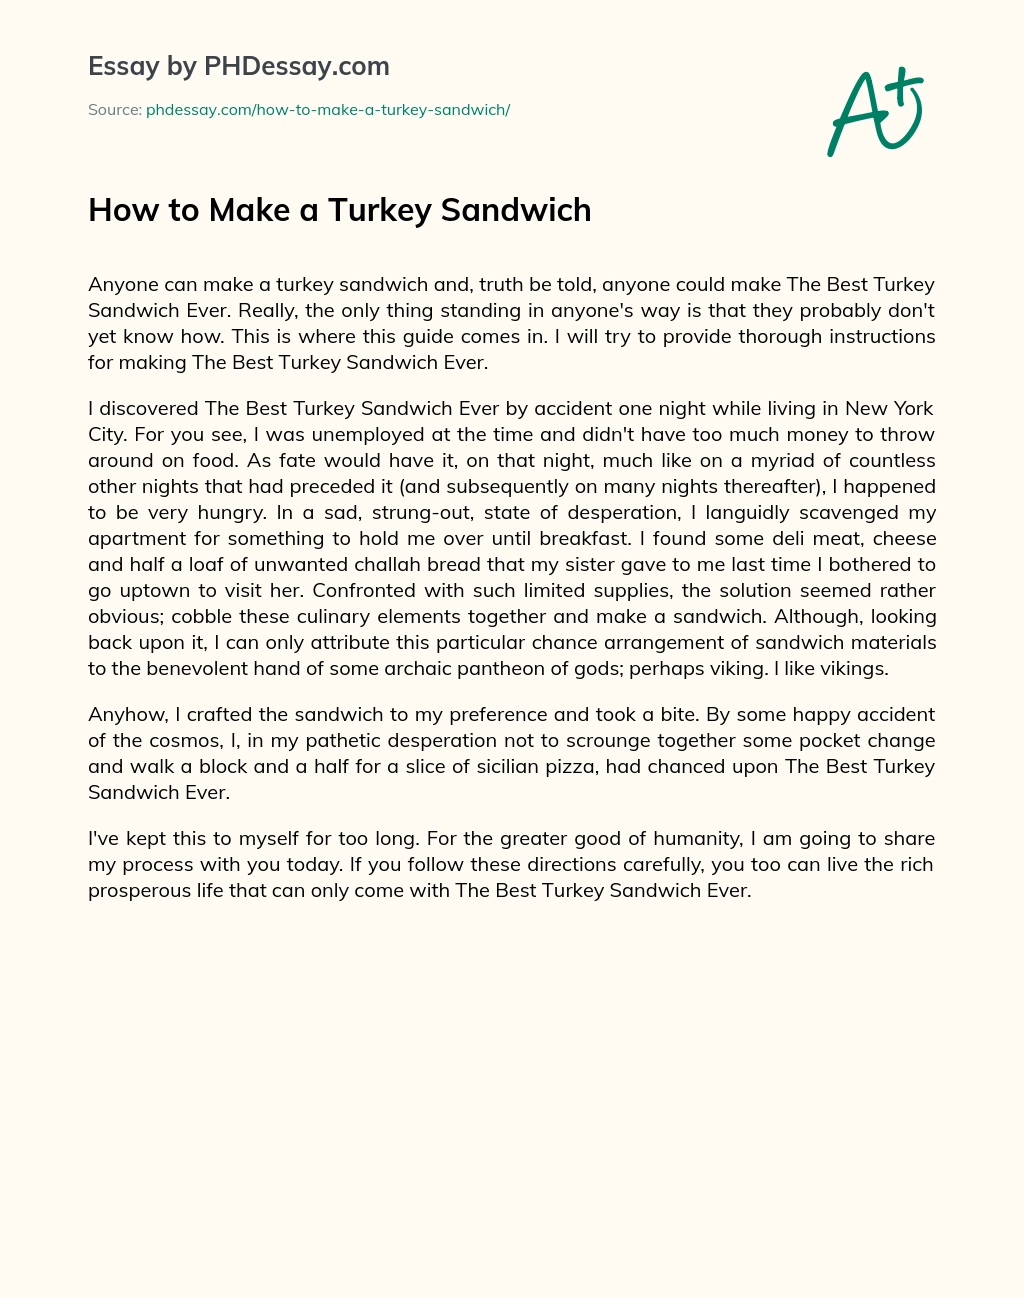 How to Make a Turkey Sandwich essay